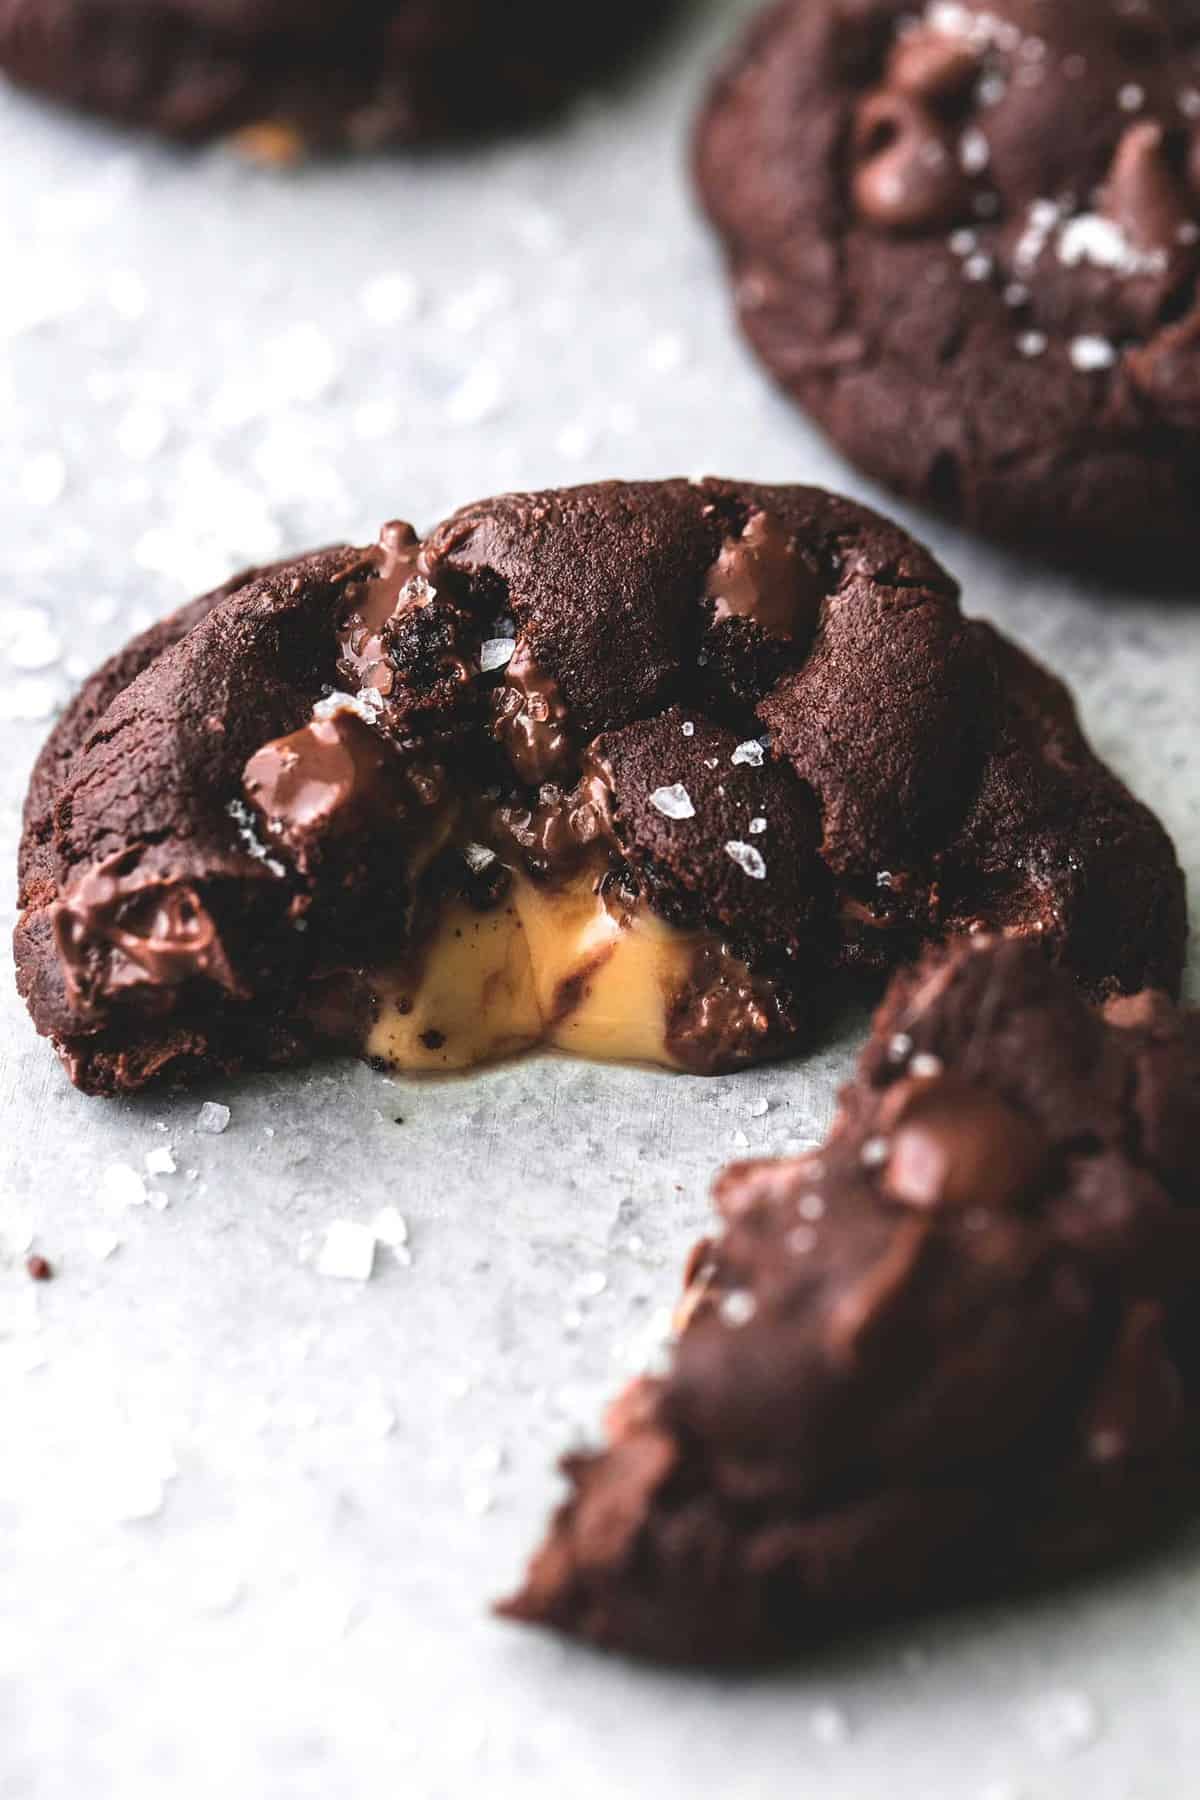 Salted Caramel Stuffed Double Chocolate Cookies - Creme De La Crumb